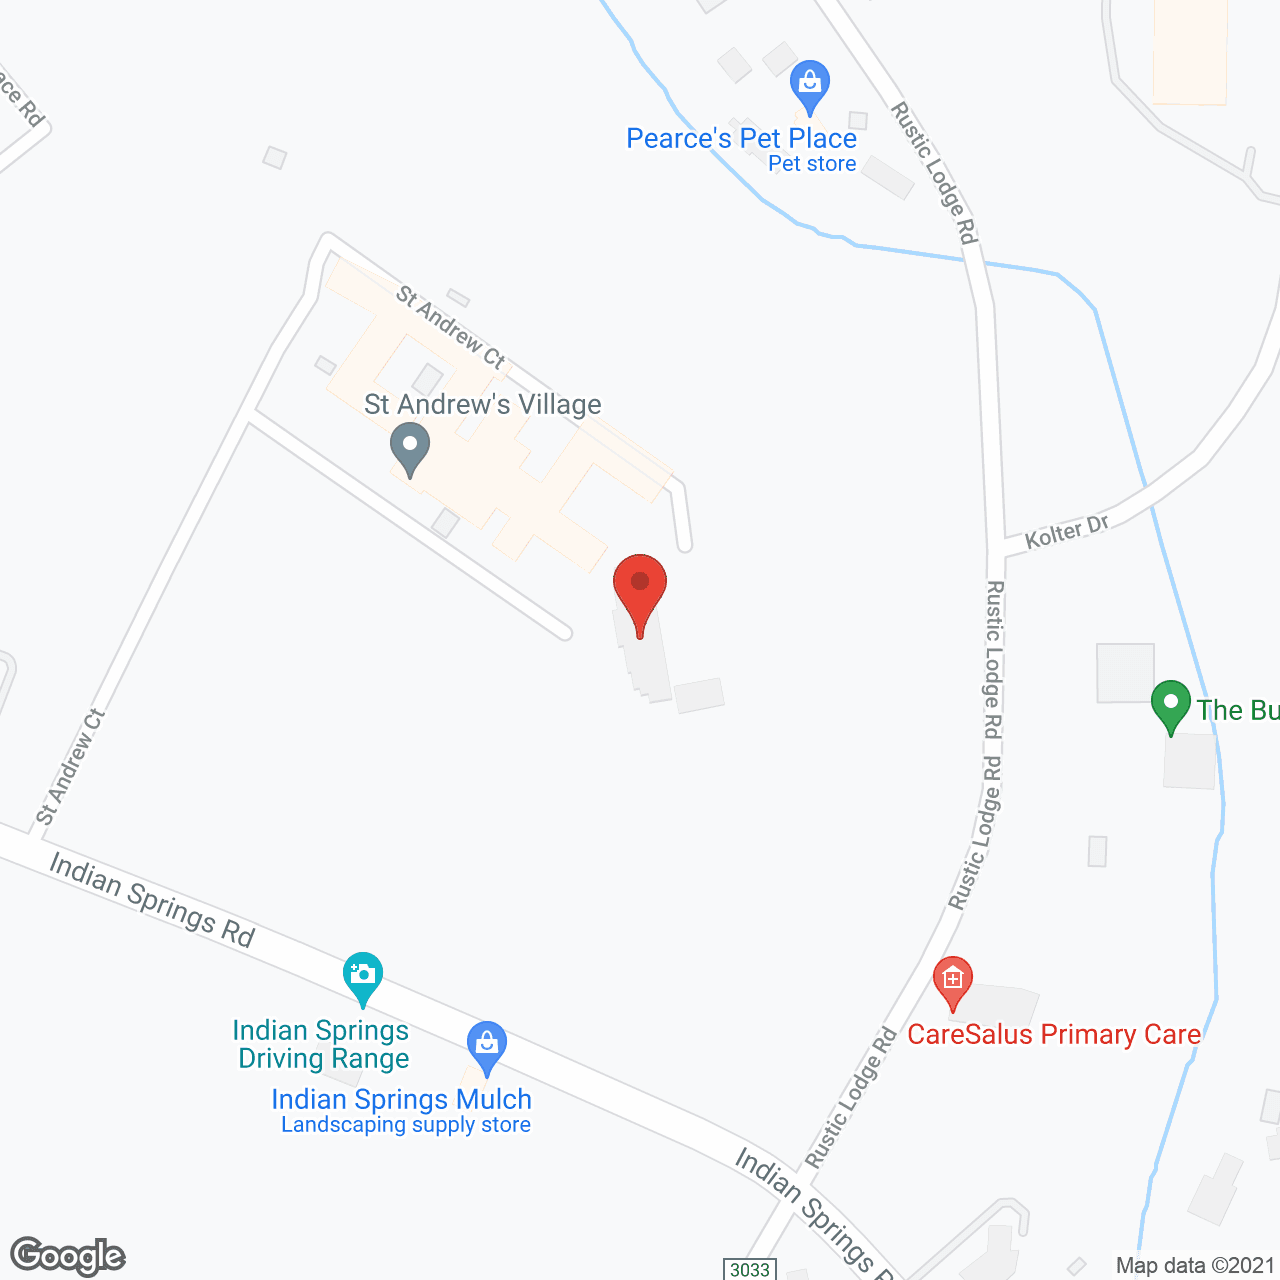 St. Andrews Village in google map